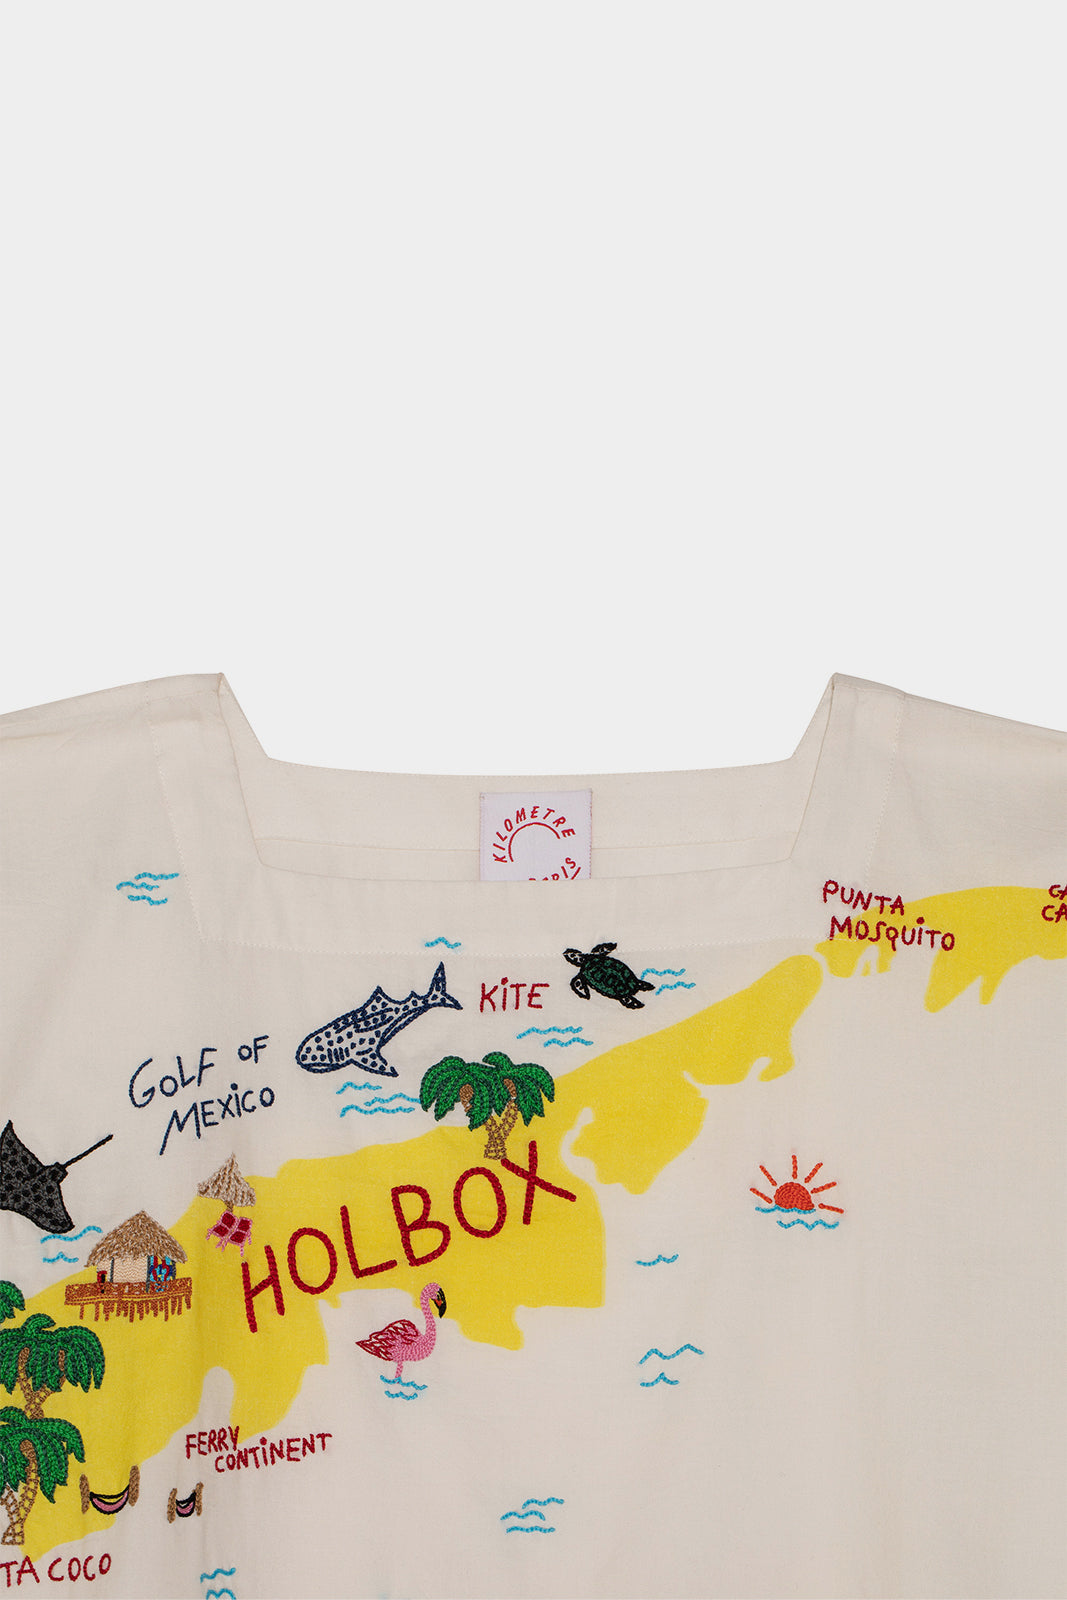 Holbox, Mexico Sailor Shirt